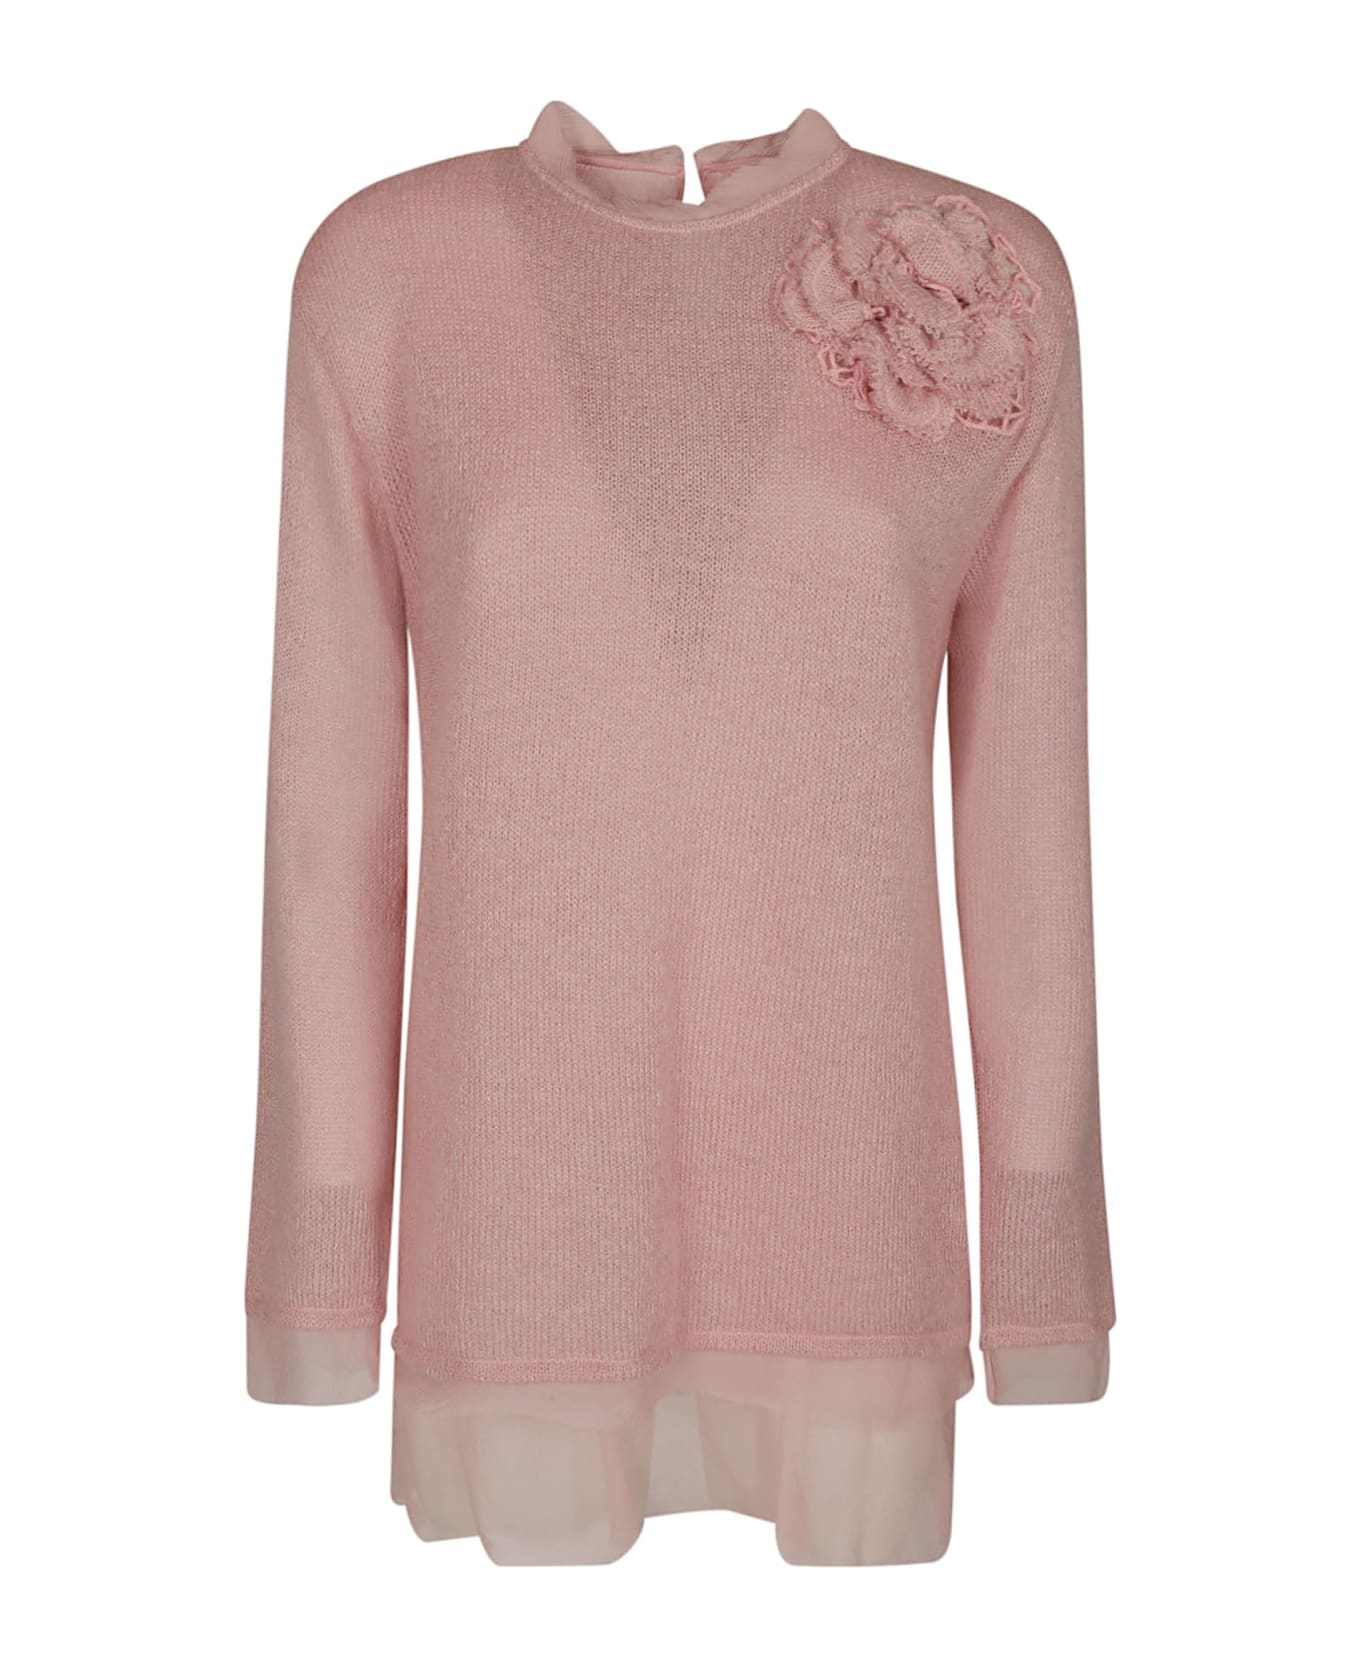 Ermanno Scervino Floral Applique Knit Sweater - Pink